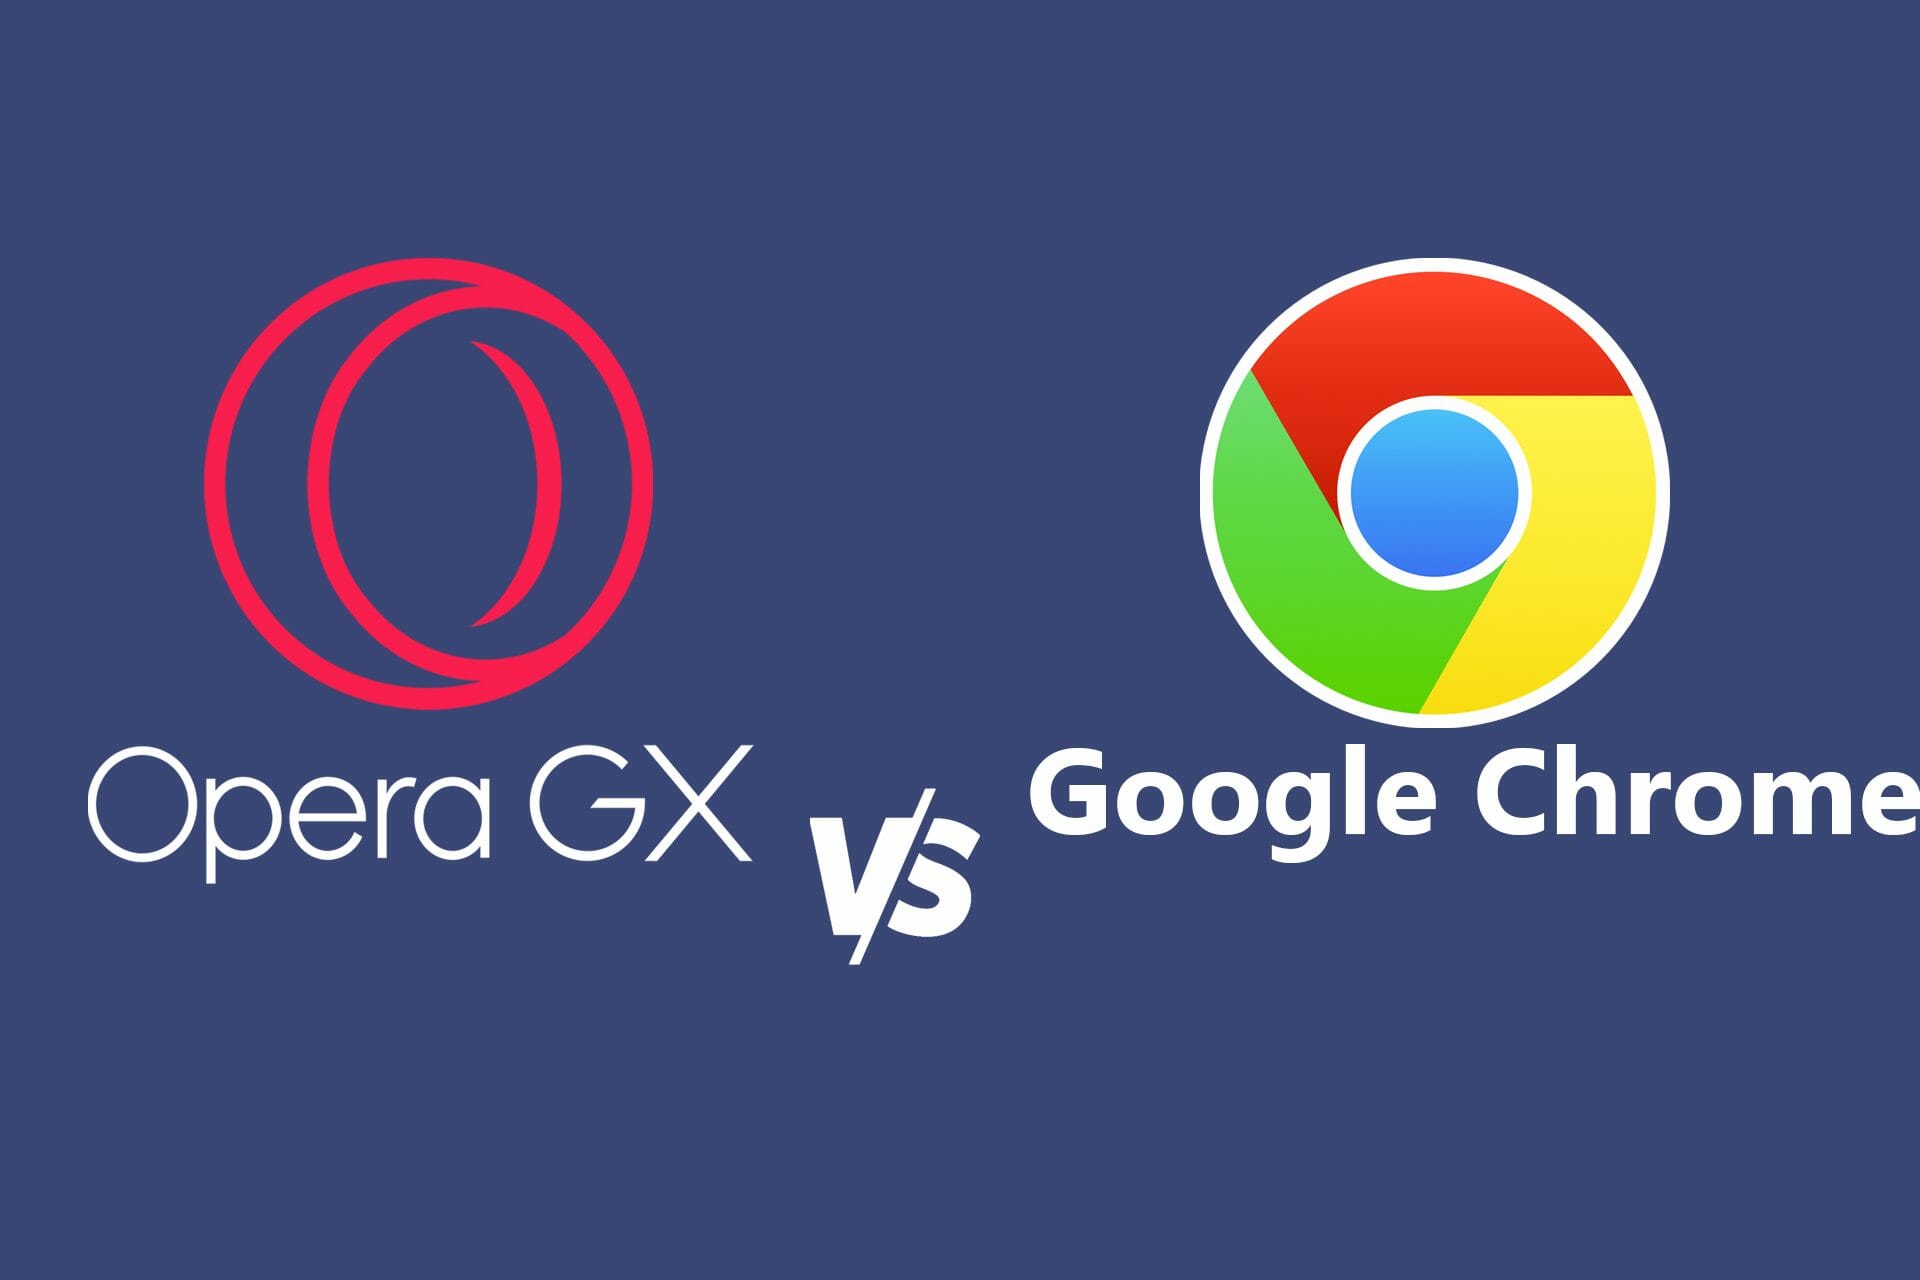 Opera GX and Chrome